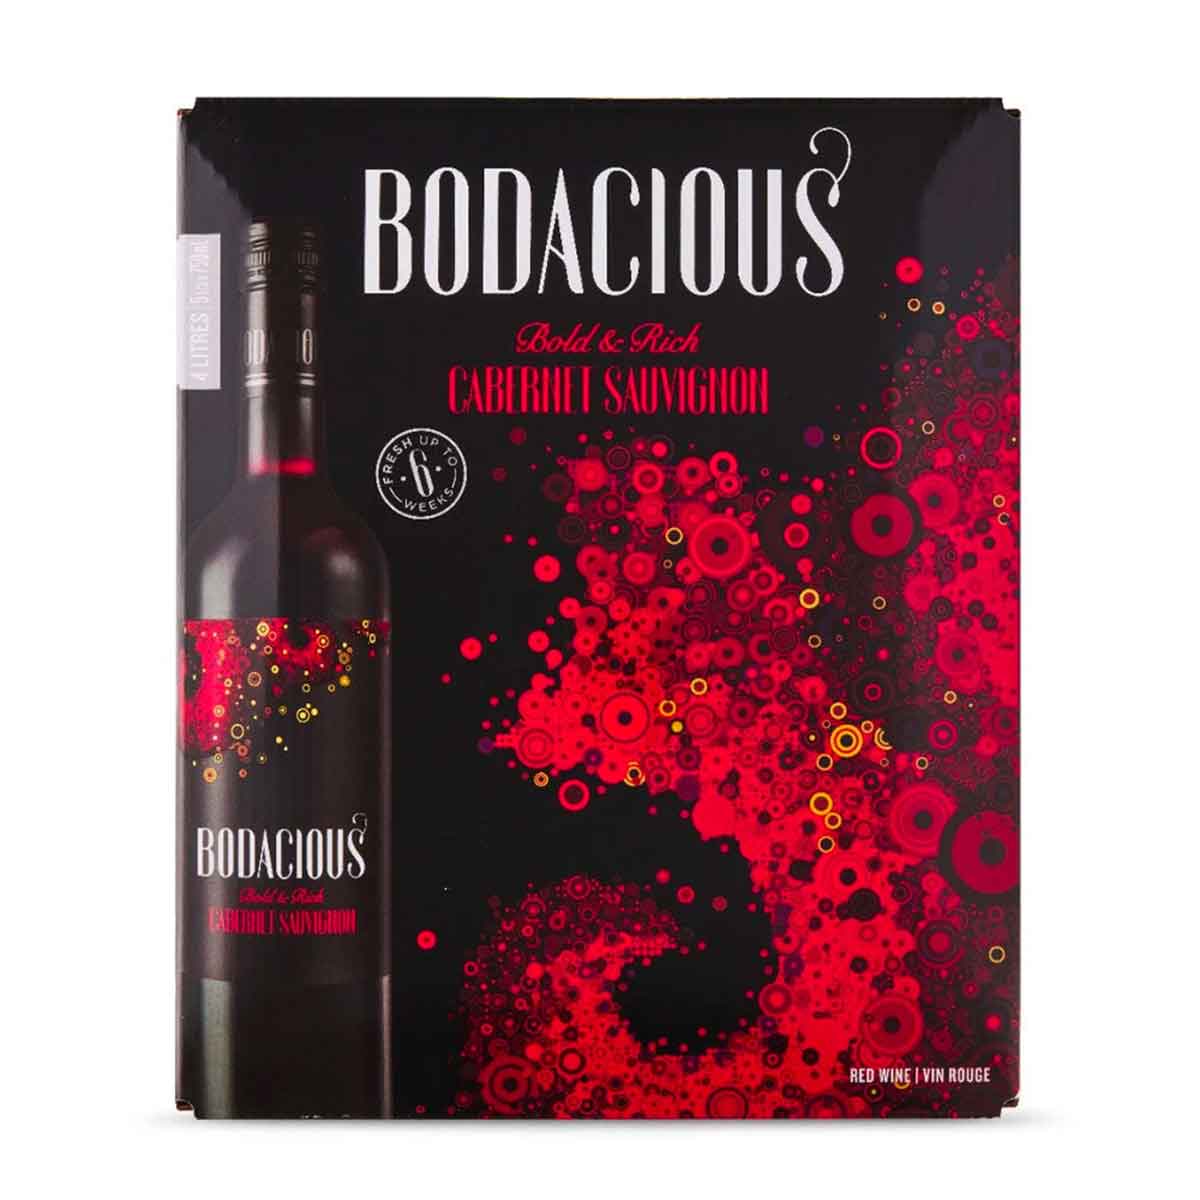 TAG Liquor Stores BC-Bodacious Cabernet Sauvignon 4L Box